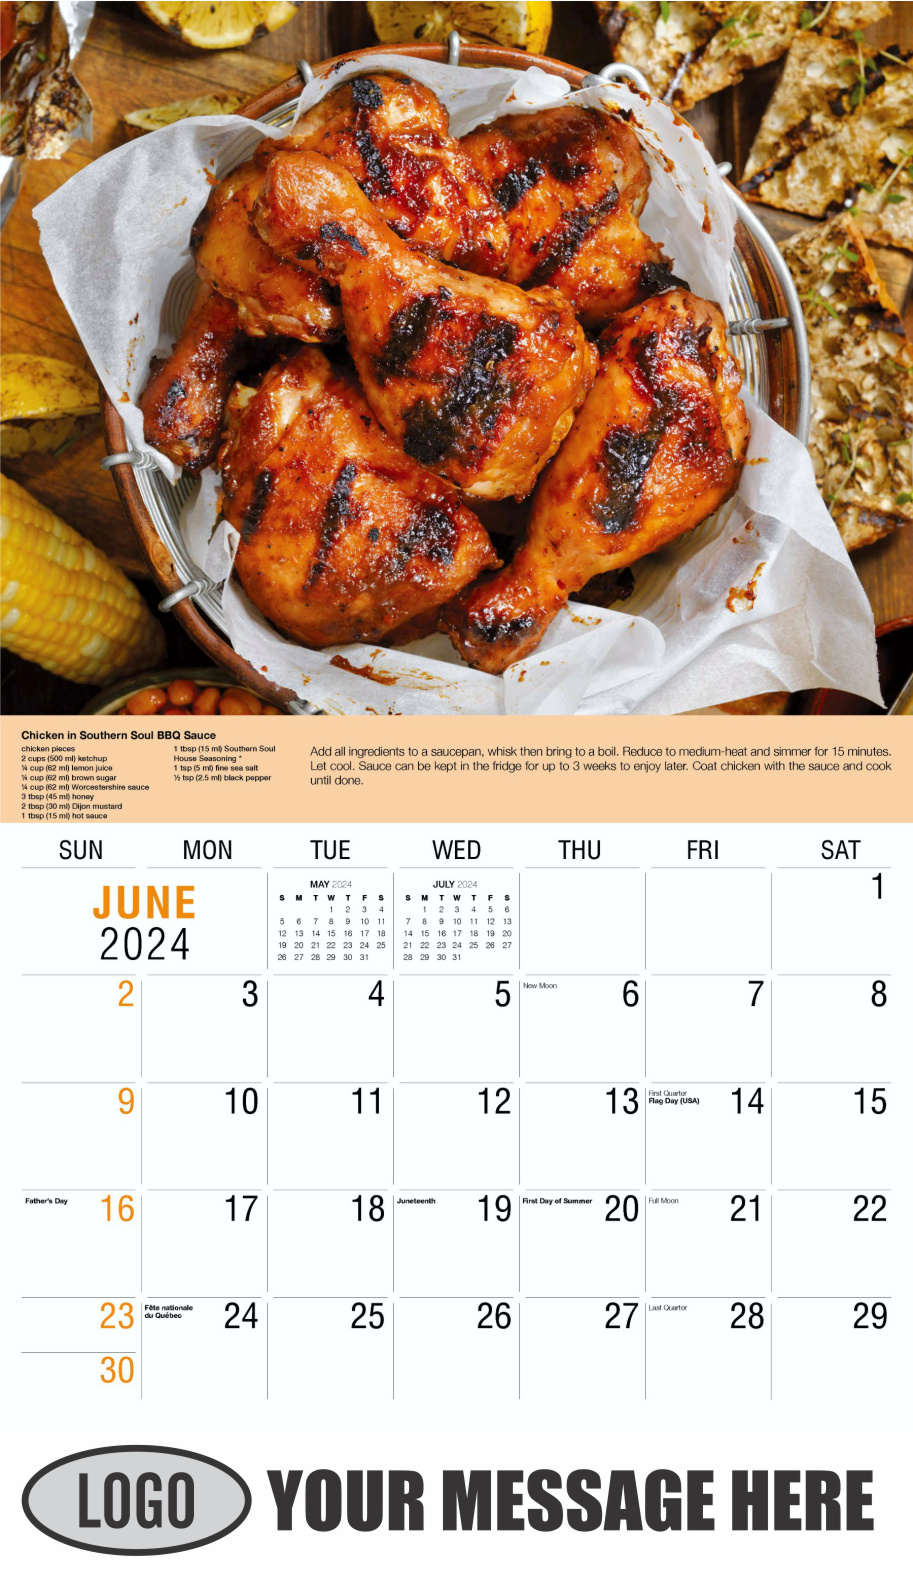 Recipes 2024 Business Promotional Calendar - June